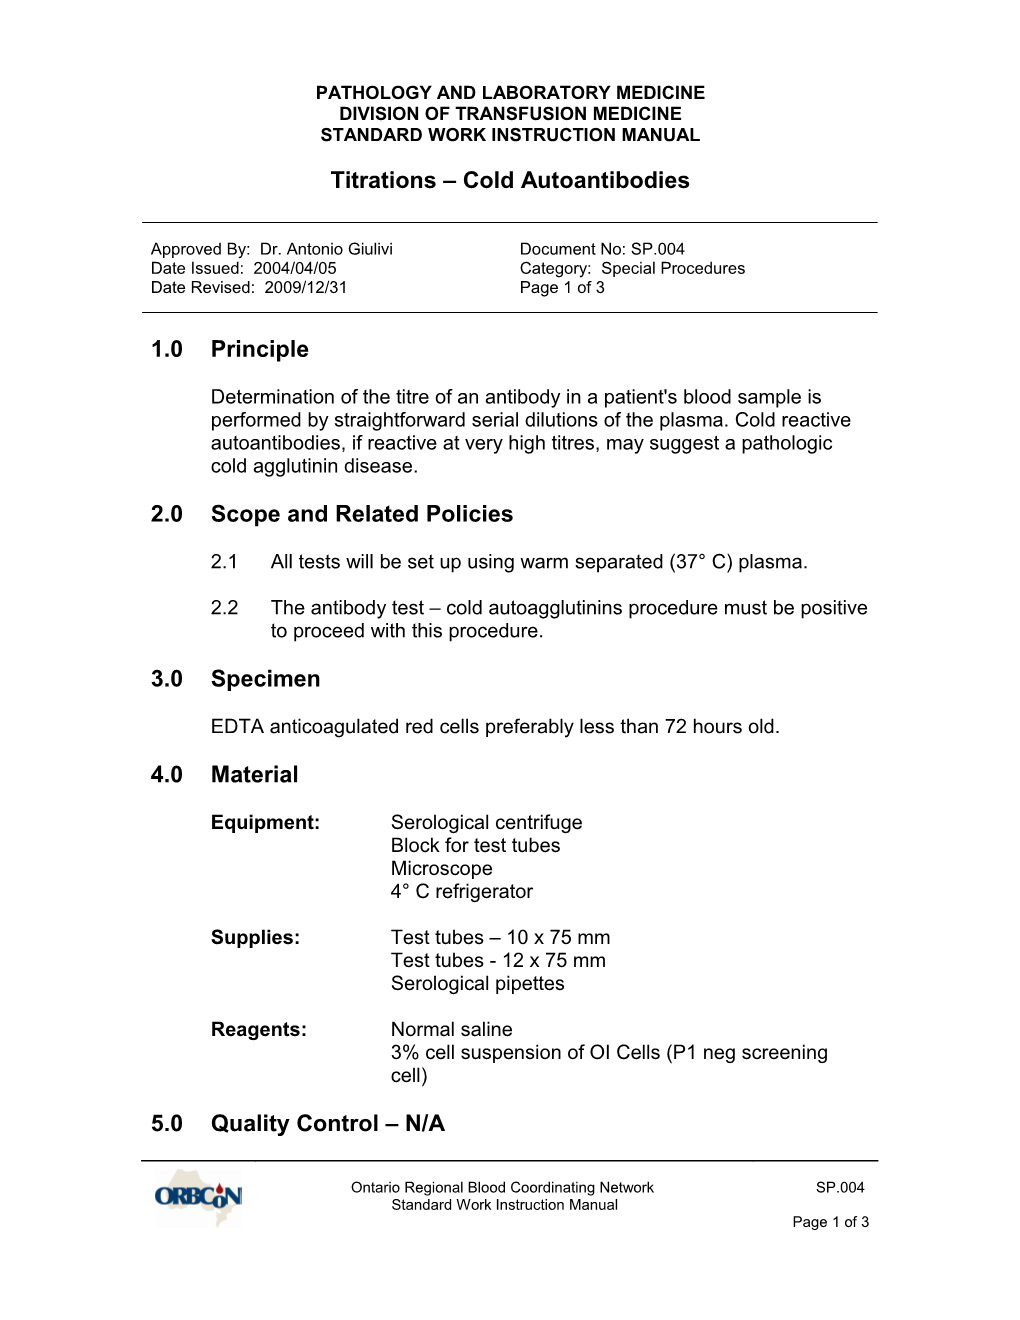 SP.004 - Titrations - Cold Autoantibodies